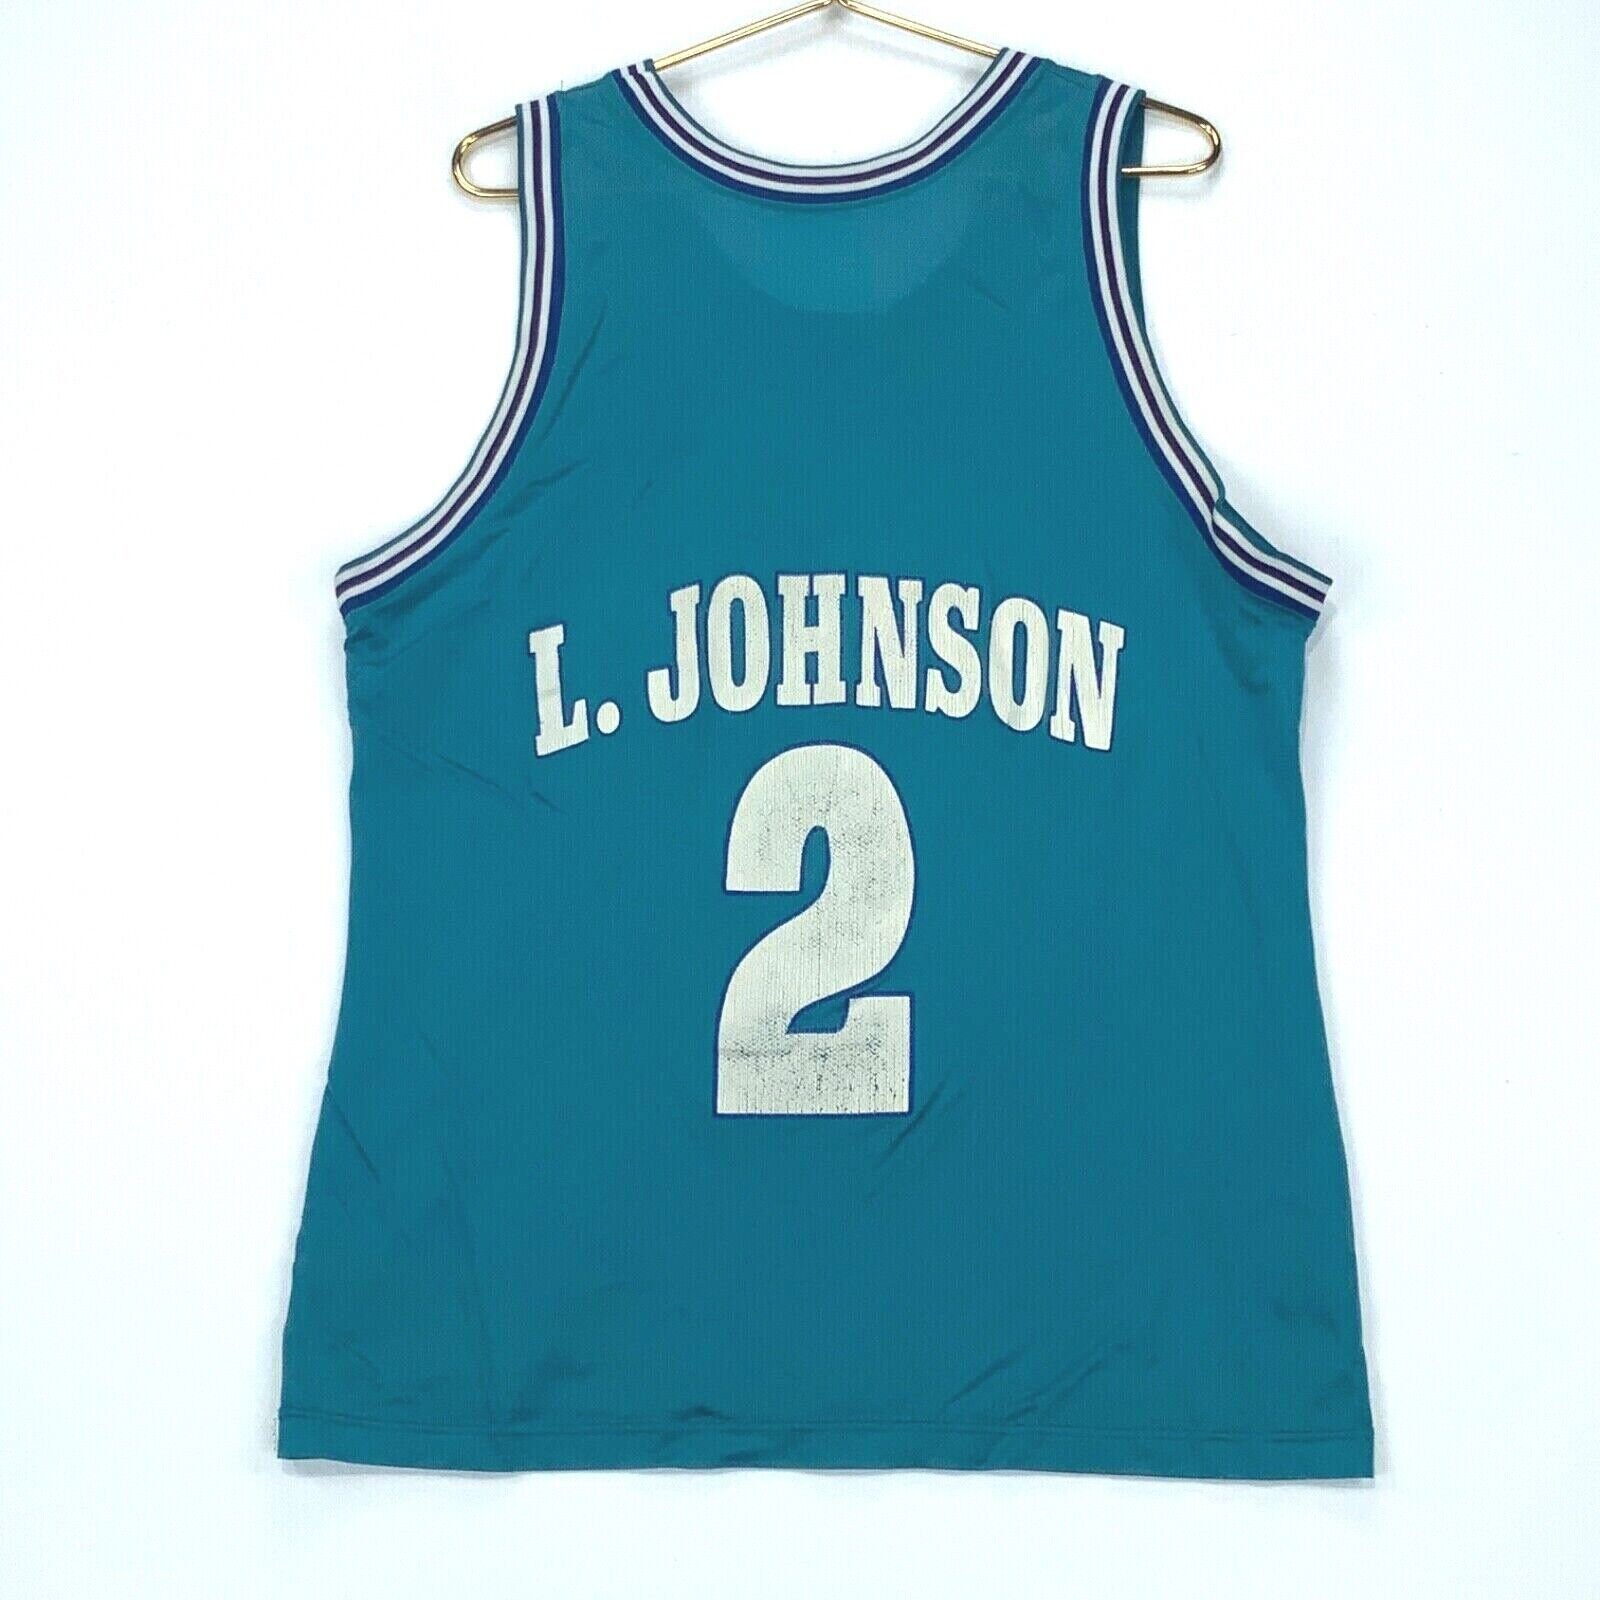 LARRY JOHNSON #2 Charlotte Hornets Champion Throwback Jersey Size 44 Vintage  90s